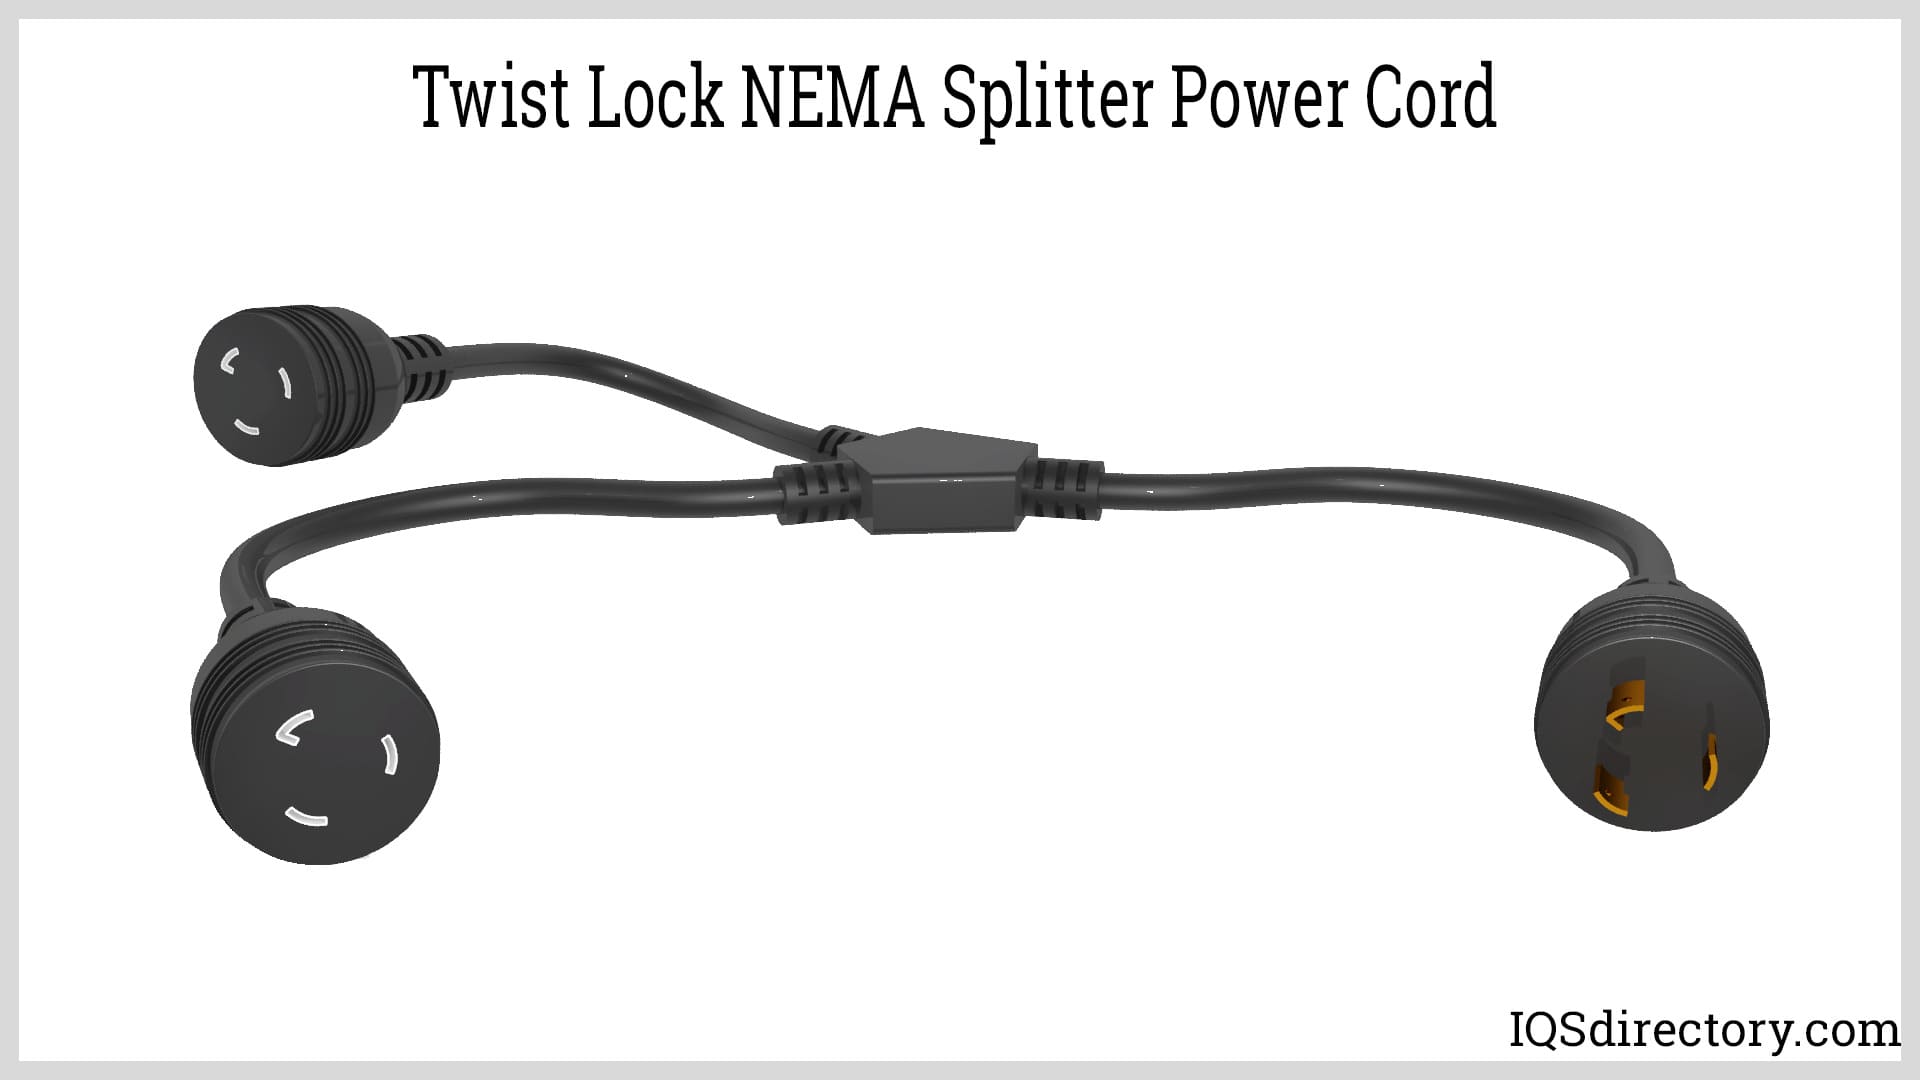 Twist Lock NEMA Power Cord Splitter